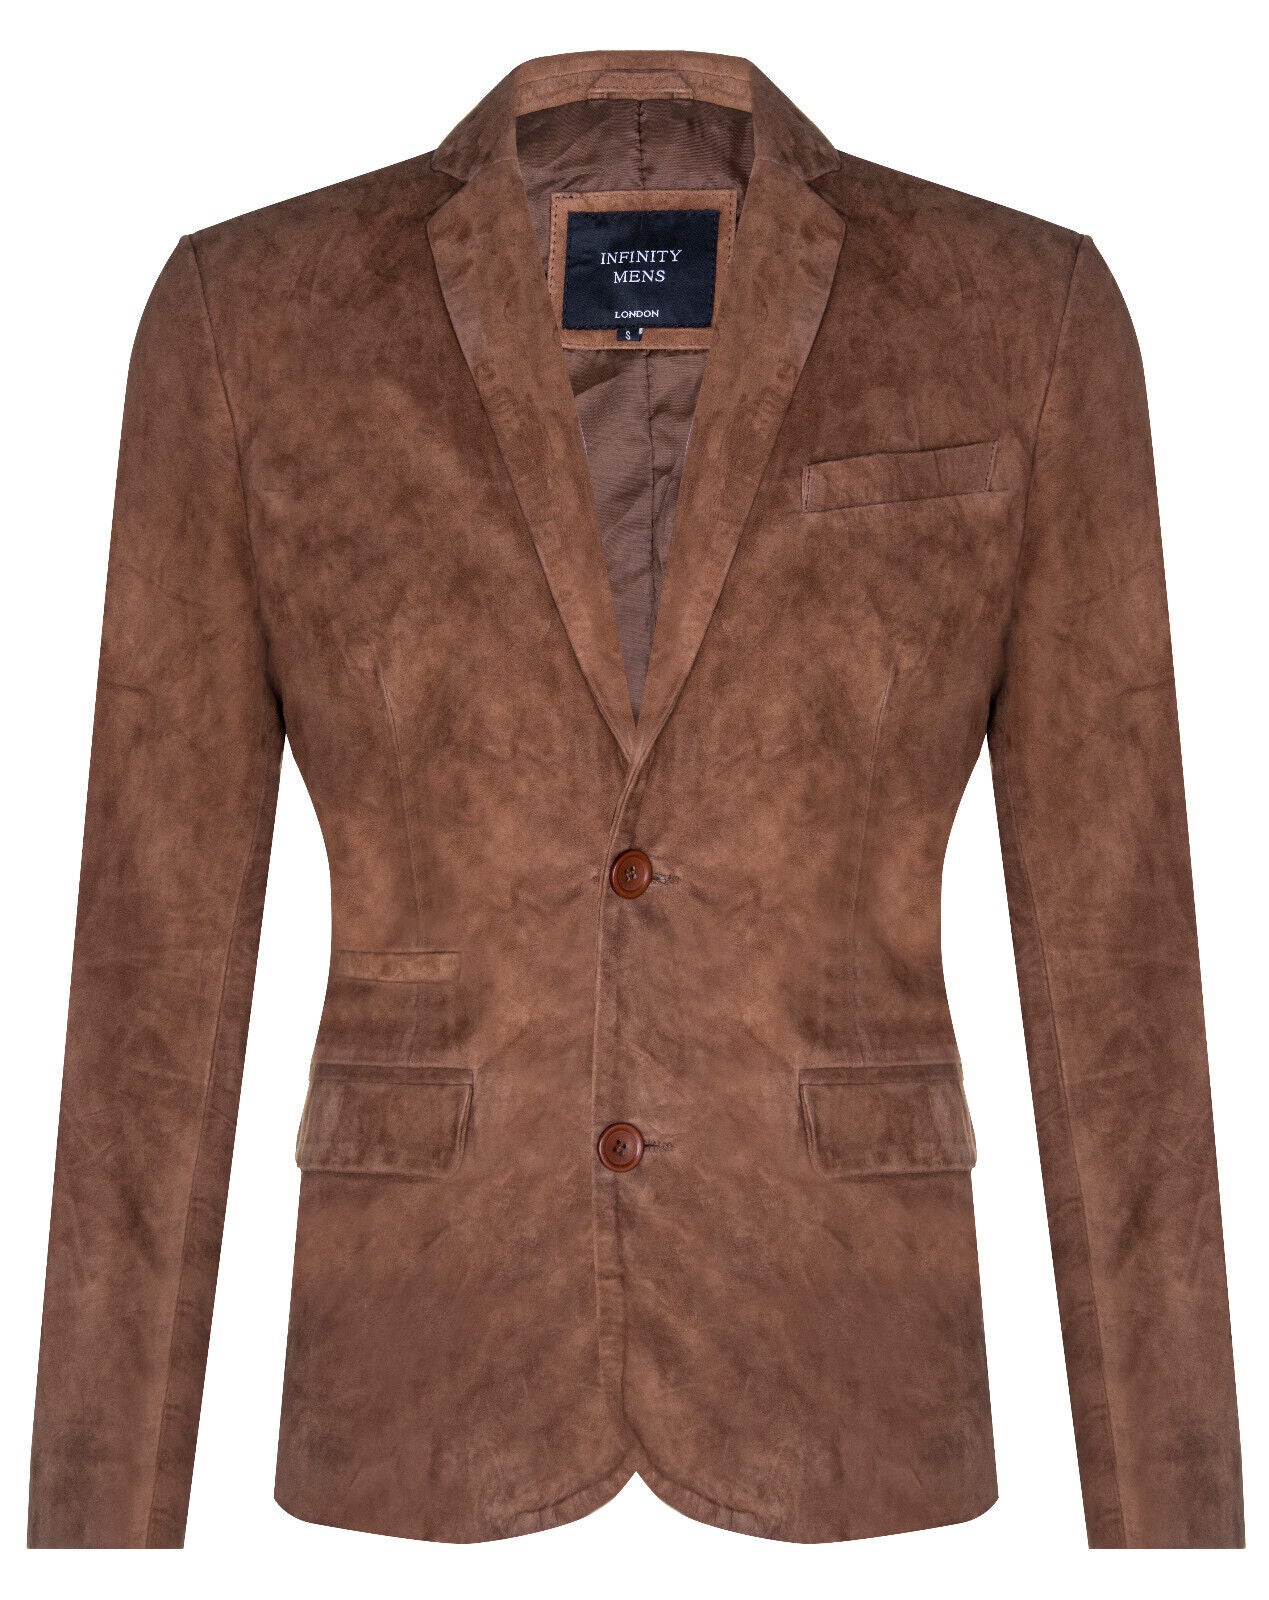 Mens Blazer Suede Jacket Soft Italian Leather Coat